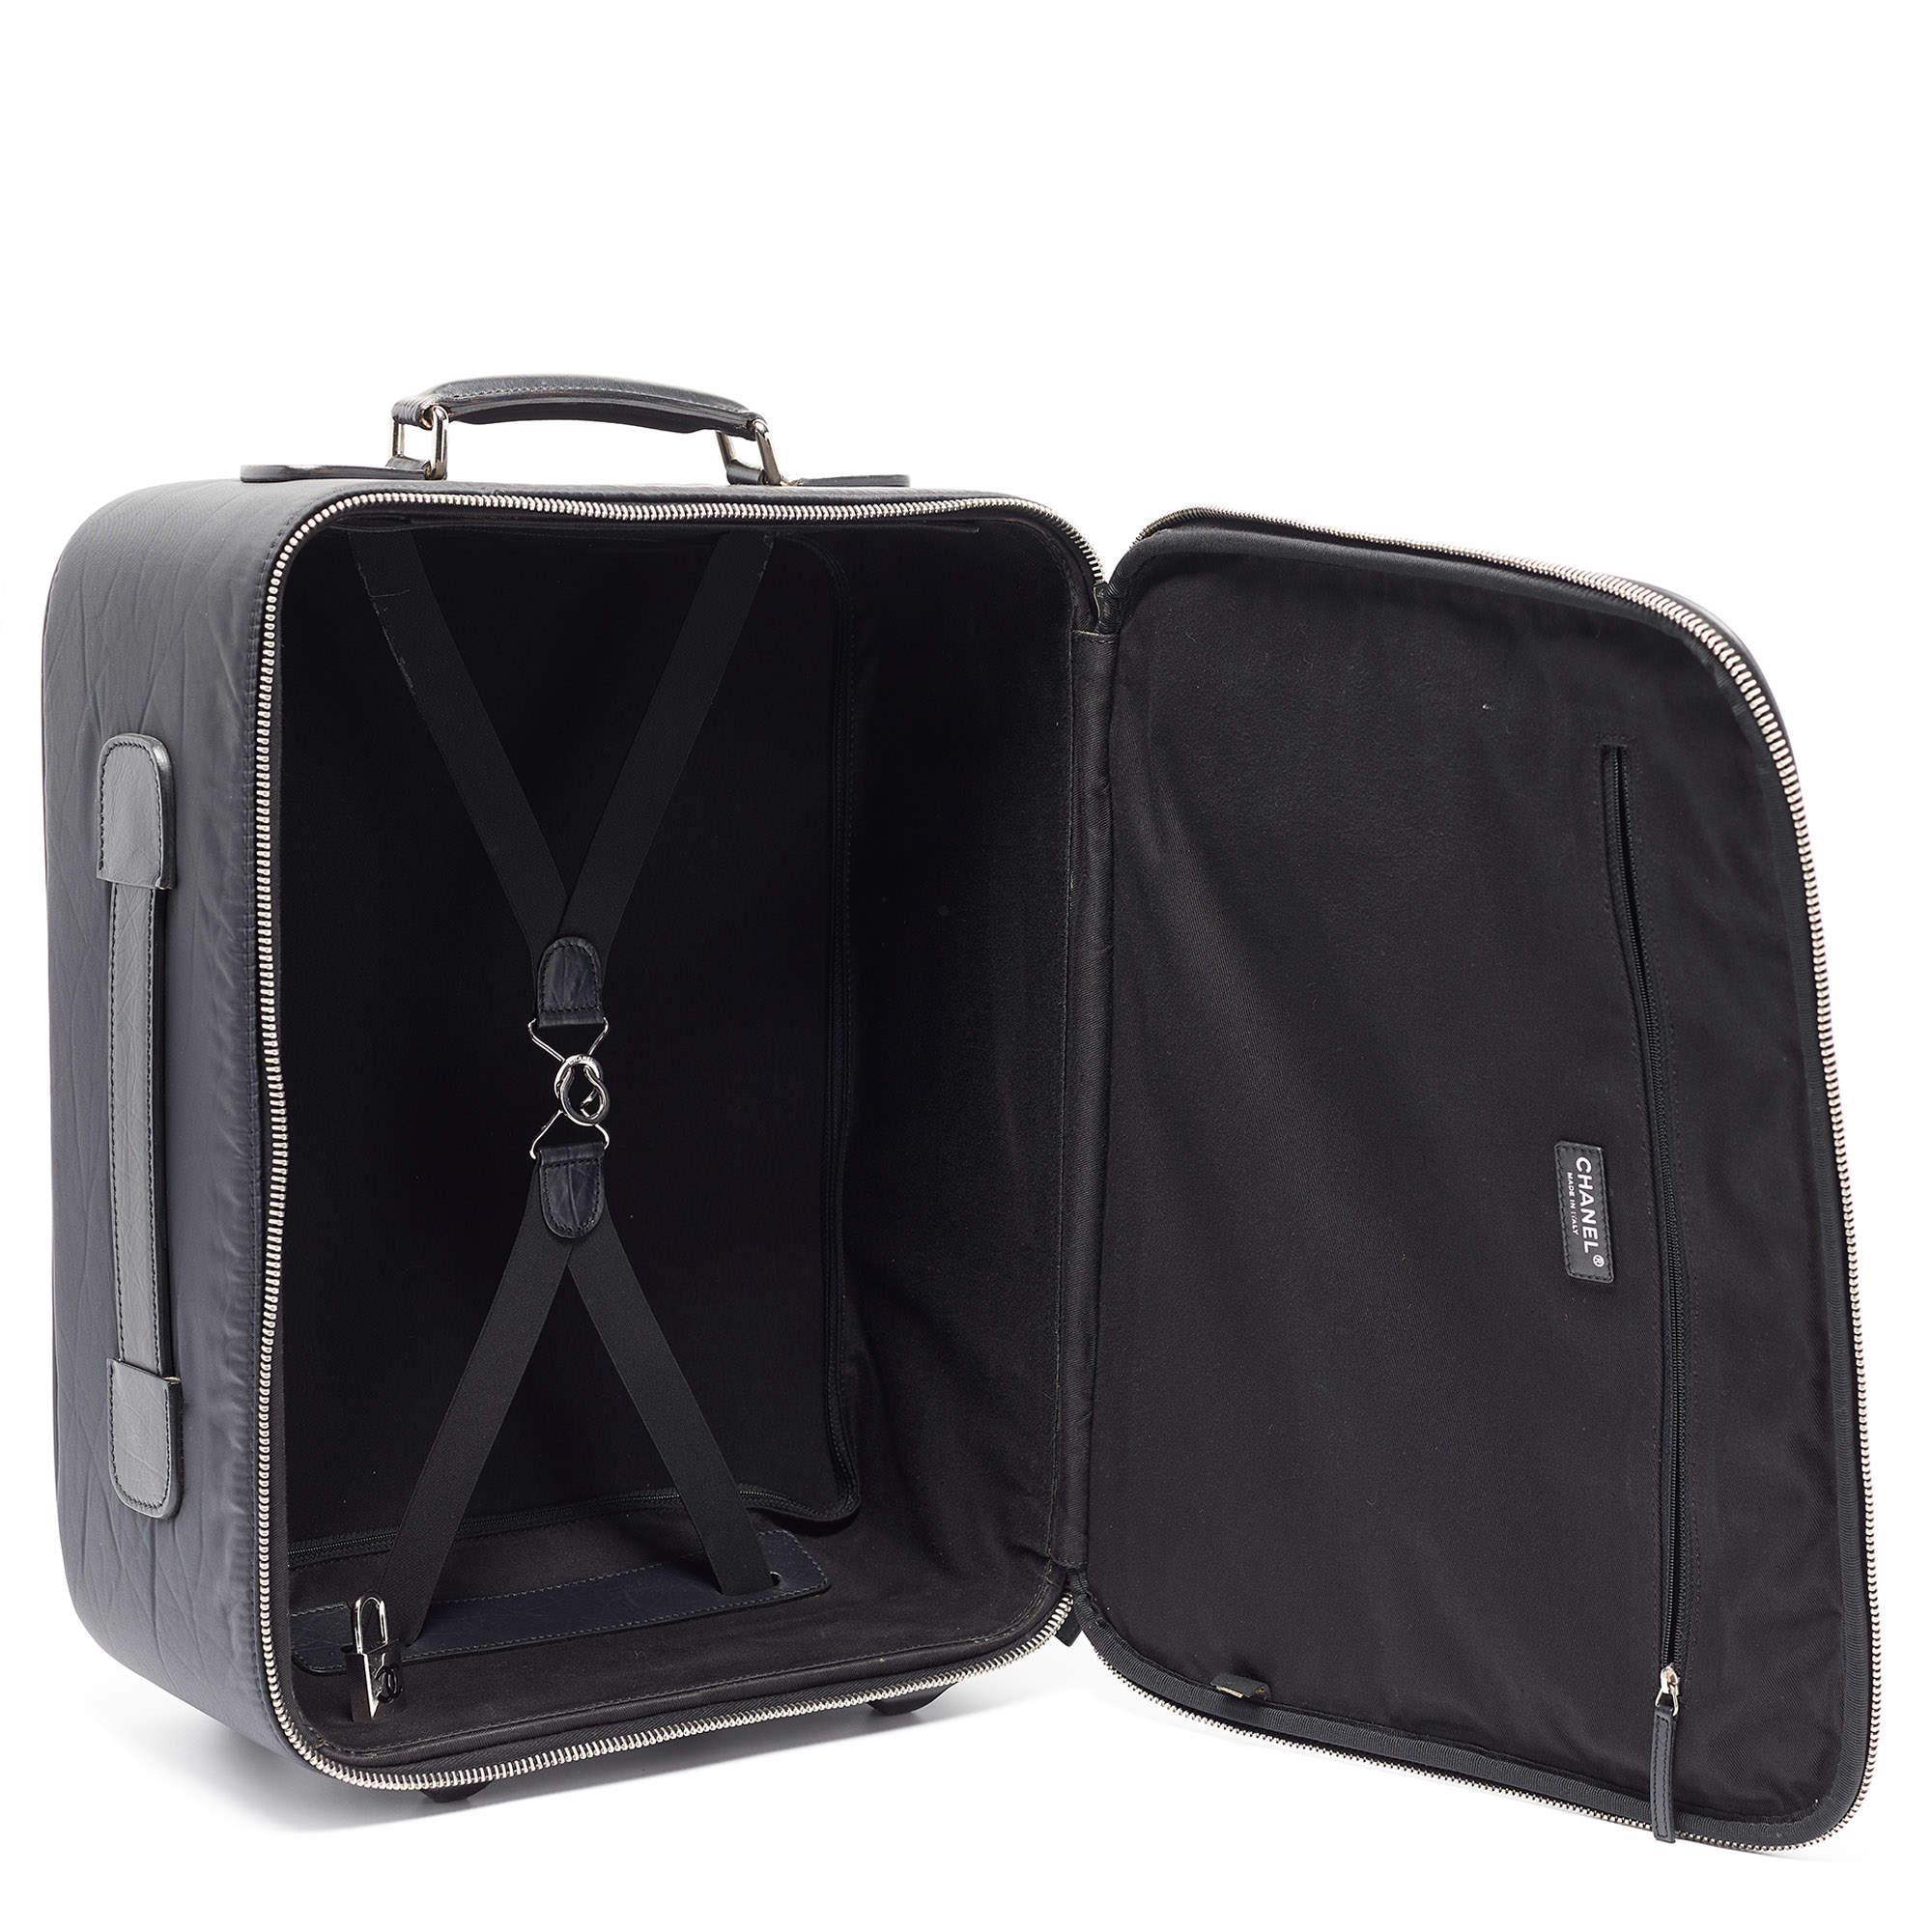 Chanel Black Quilted Nylon 2 Wheeled CC Luggage (Bagages à 2 roues en nylon matelassé) 6